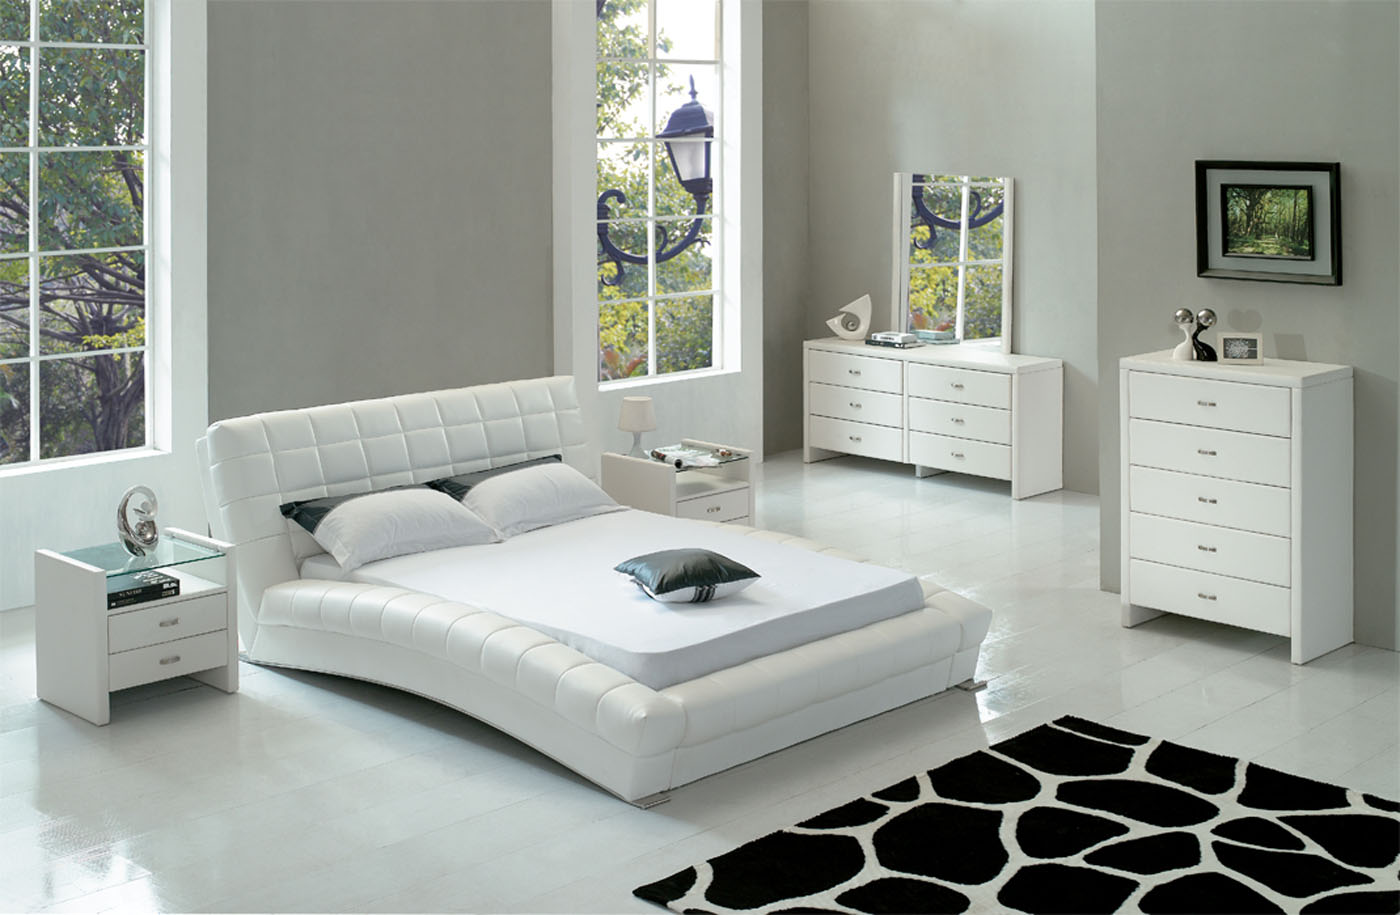 rental white bedroom furniture